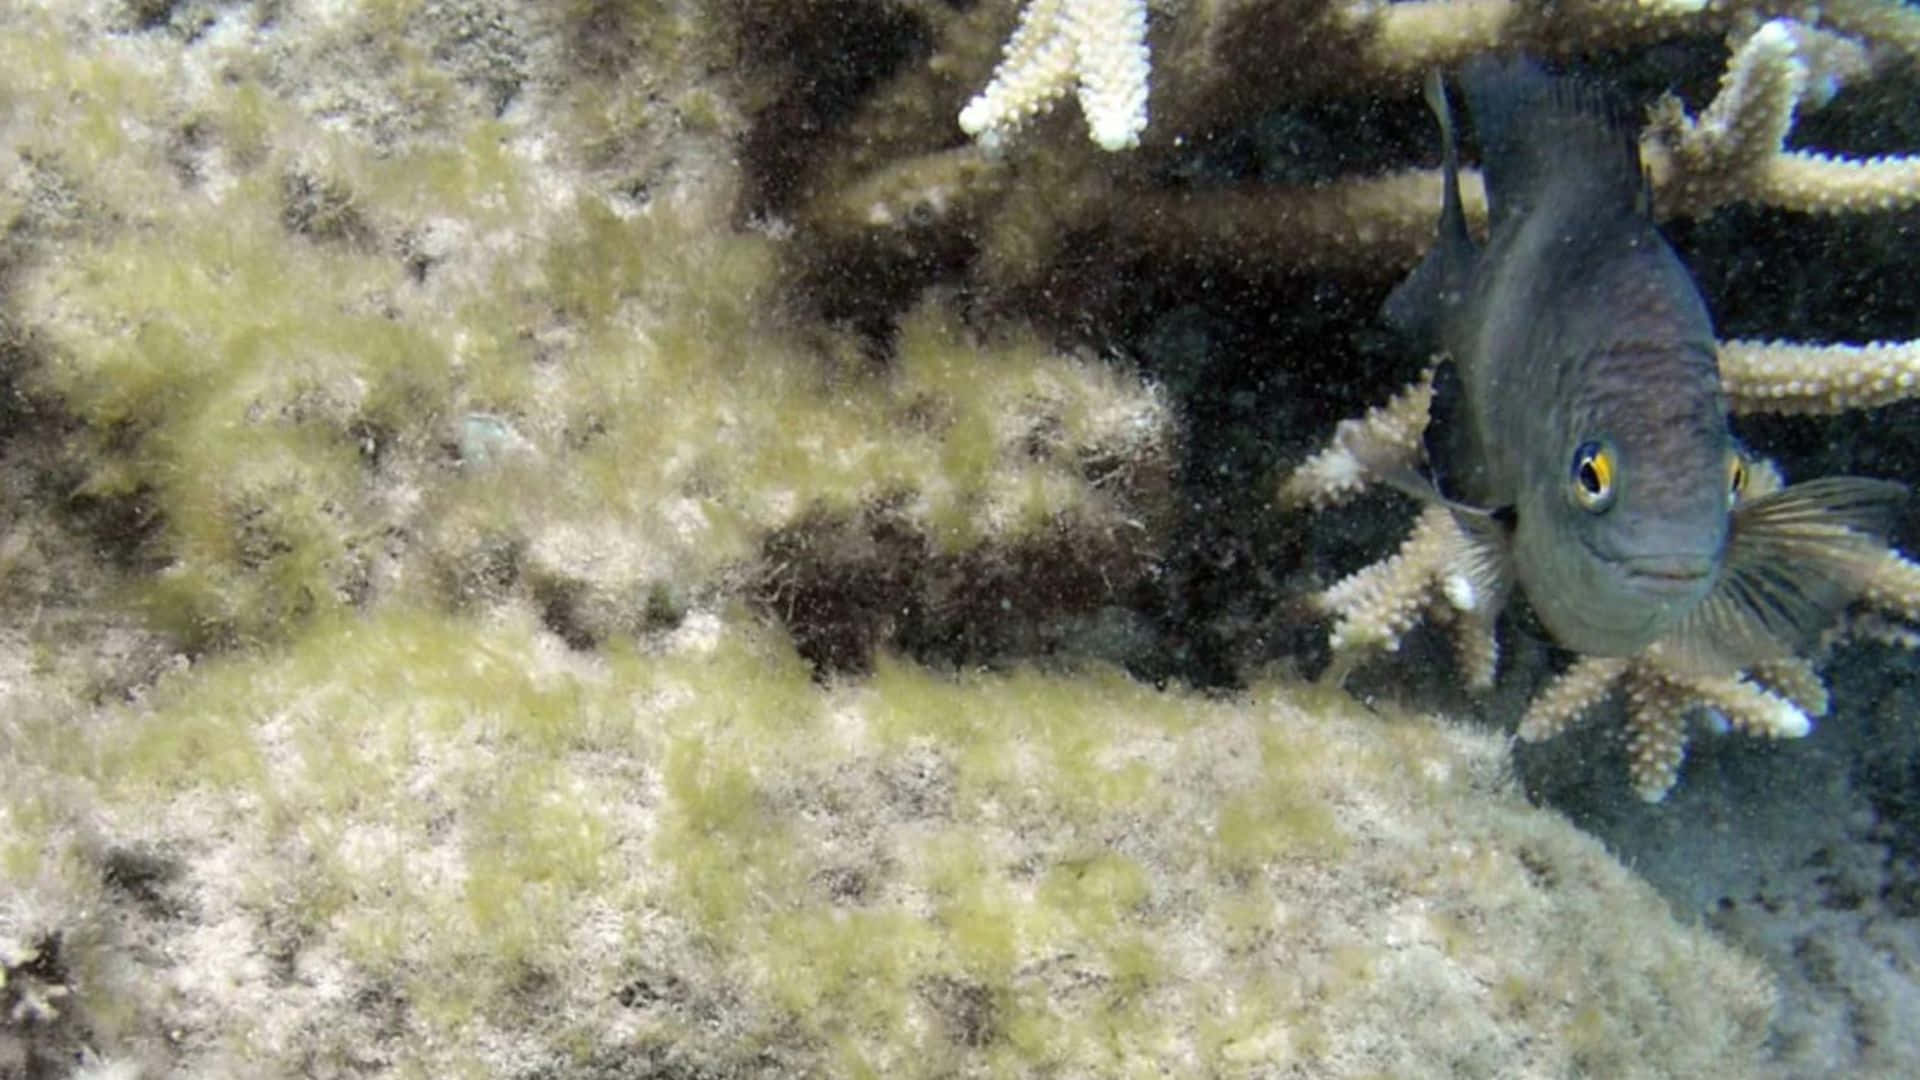 Damselfishin Coral Reef Habitat Wallpaper